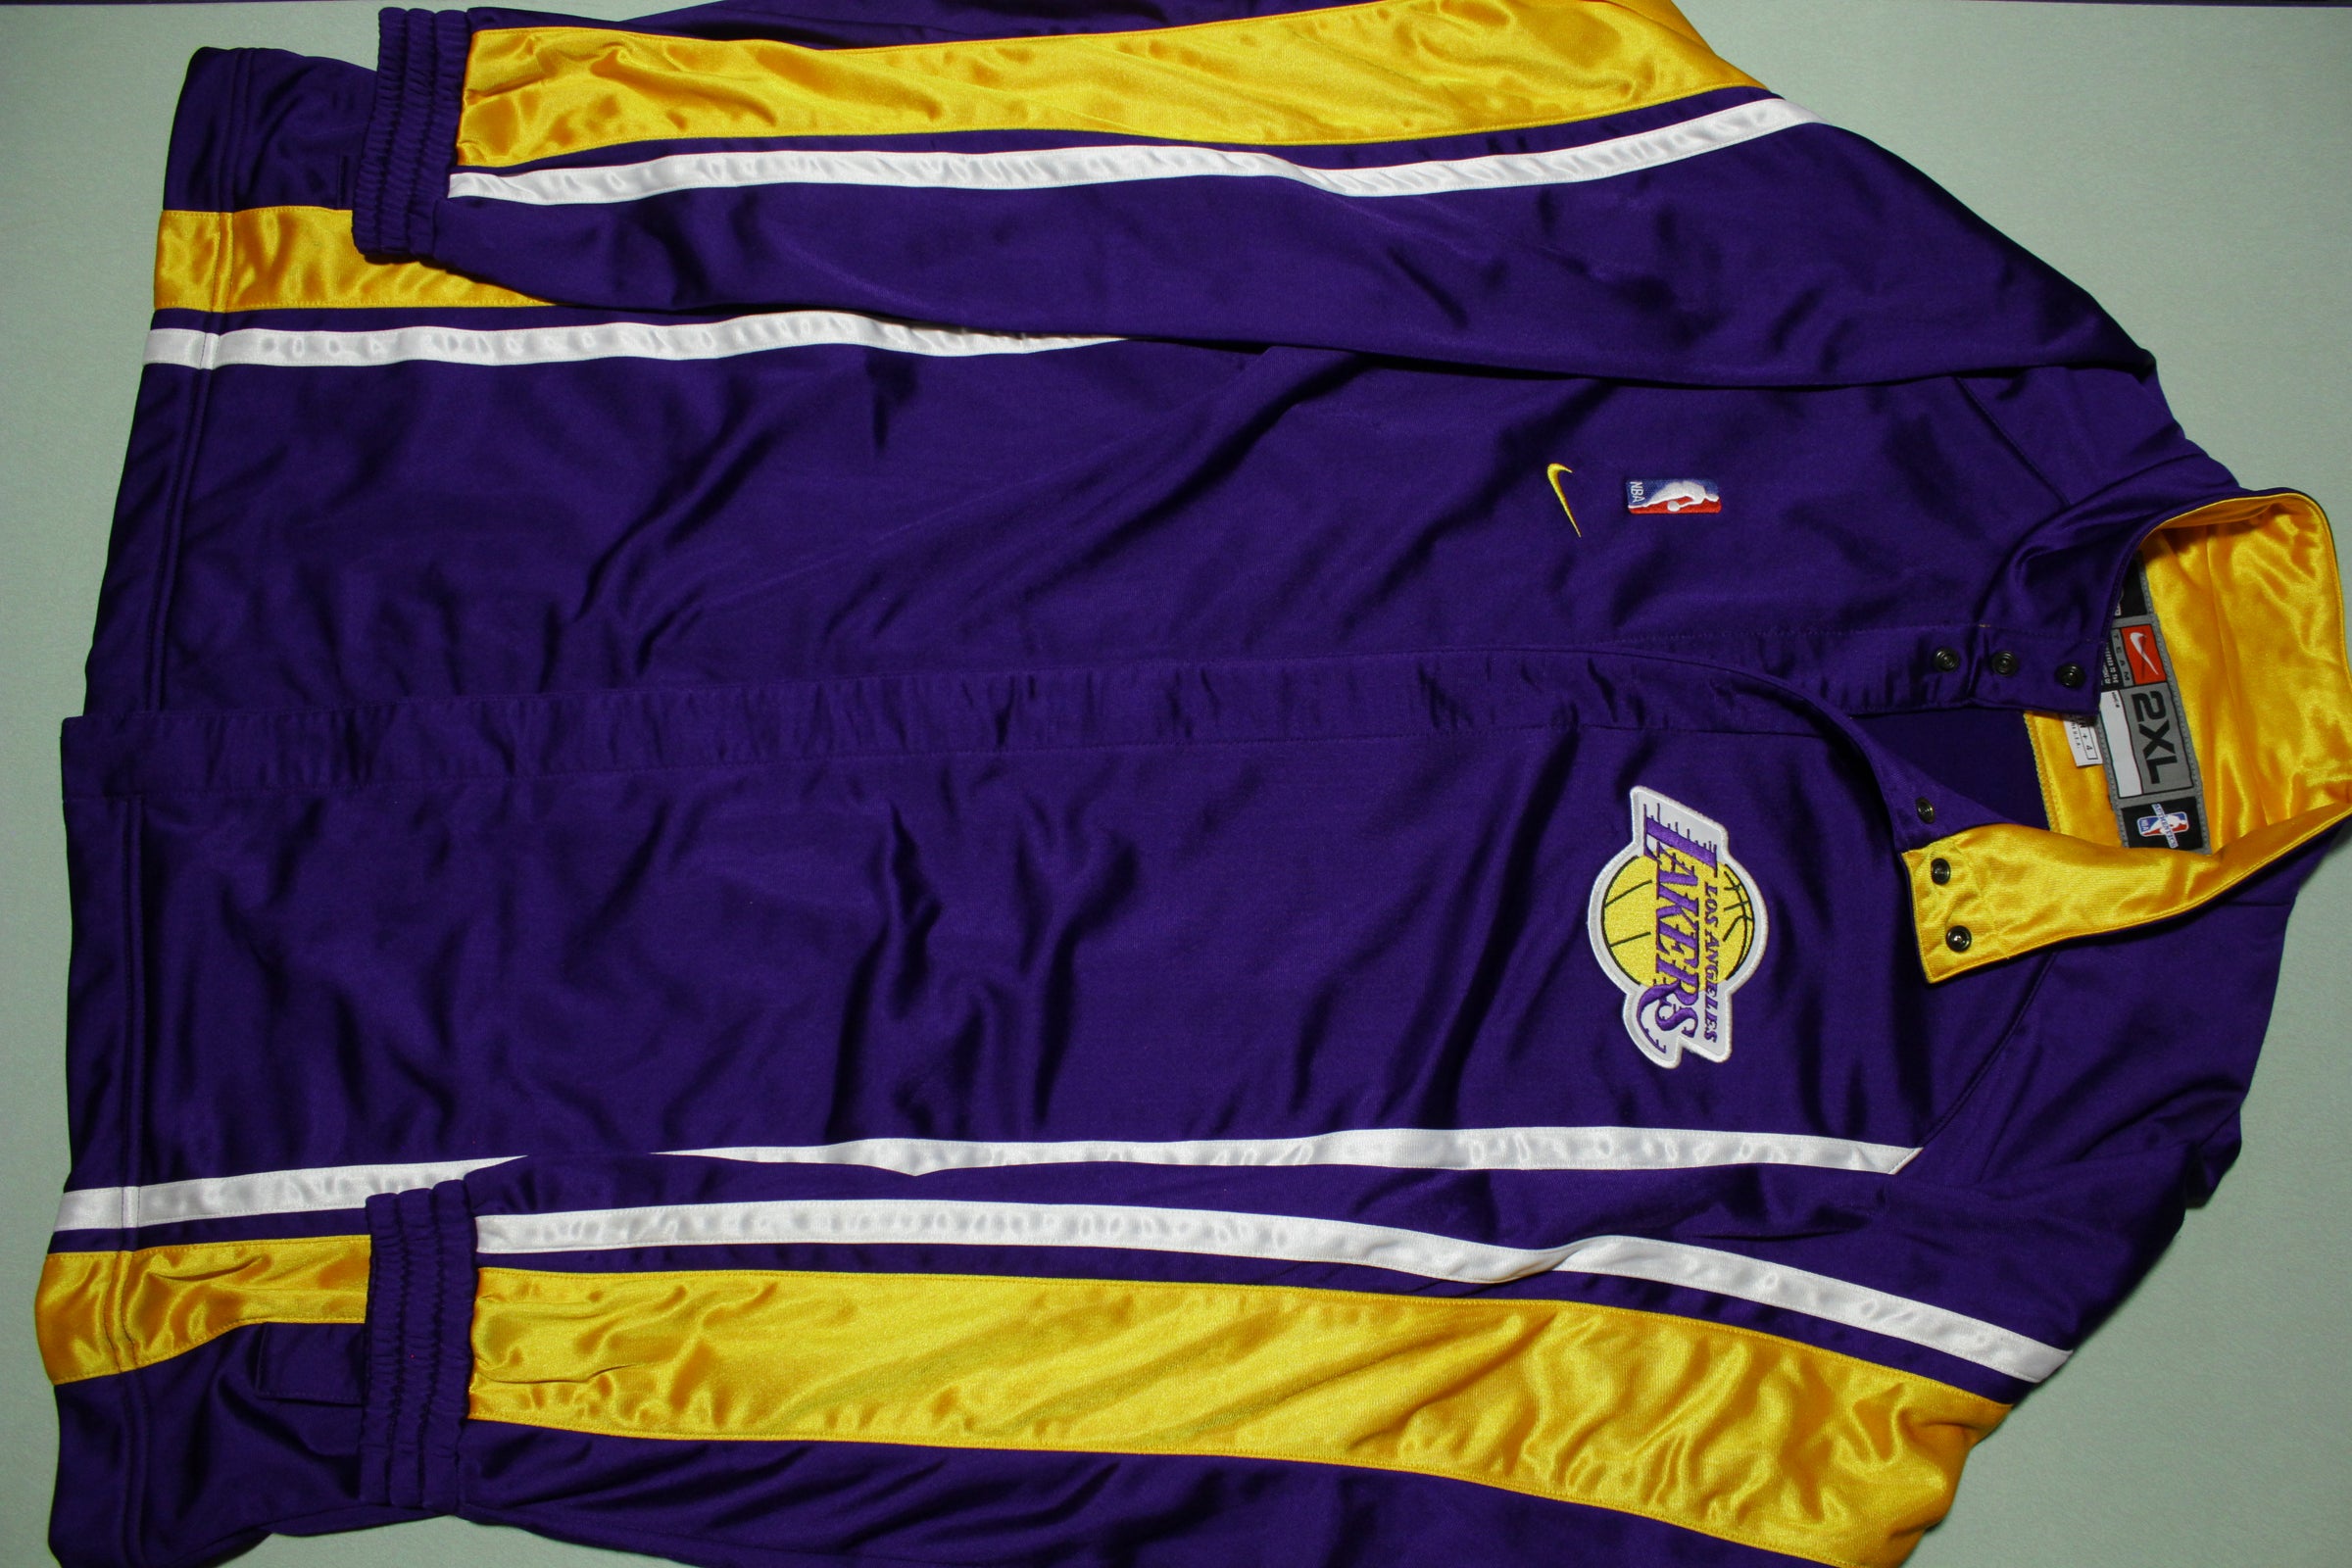 Vintage Nike Team Authentics Los Angeles Lakers Warm Up